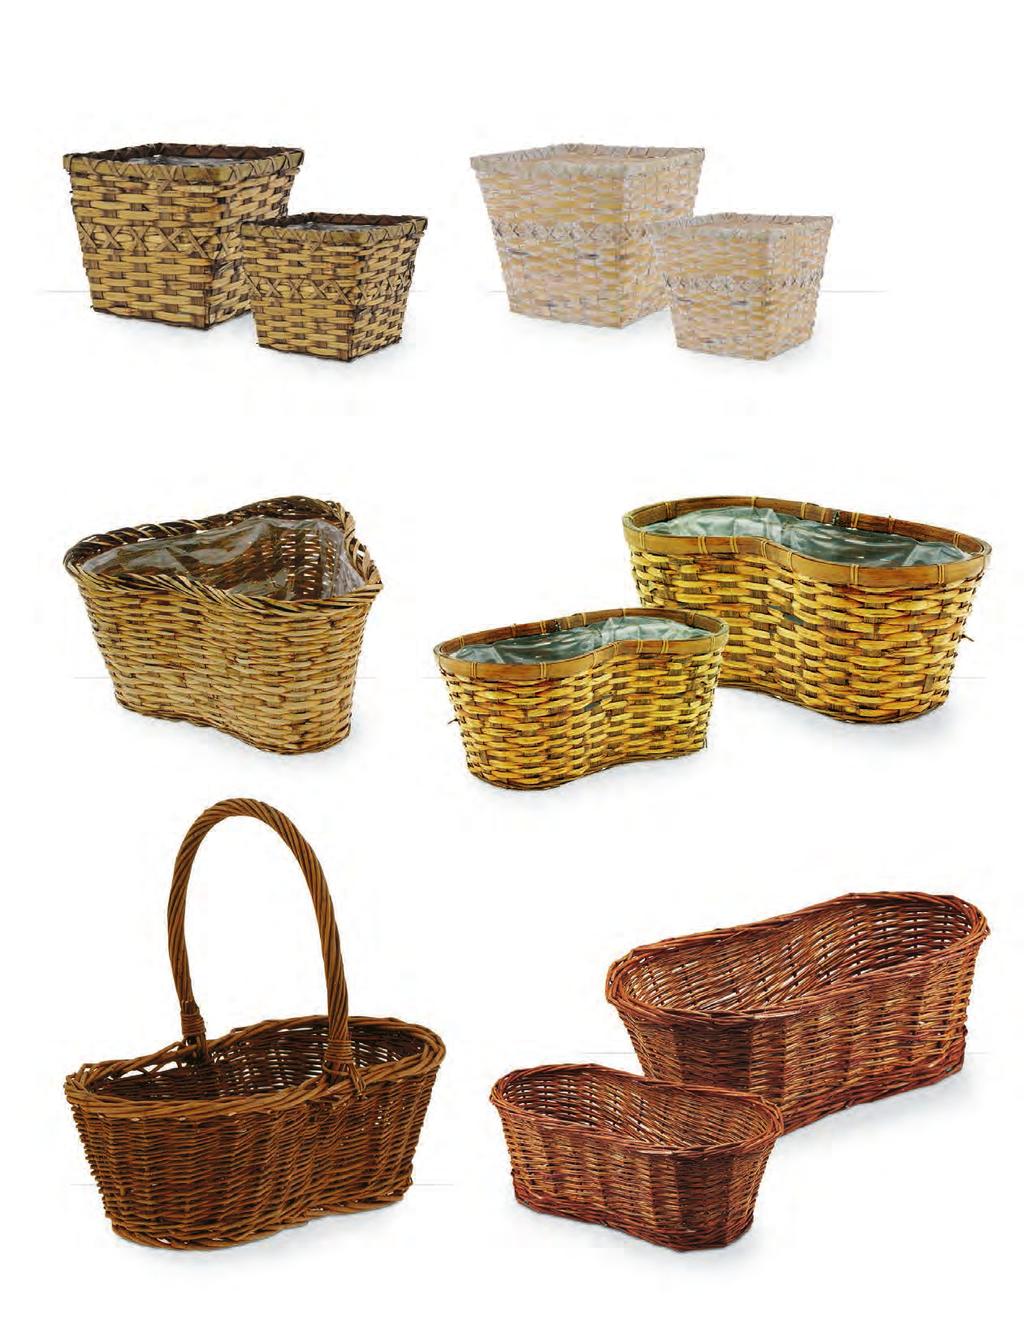 Faux Rattan Square Planters Includes Sewn-In Liners 3978-ST Fits 8 pot 6/$4.99 ea. 2976-ST Fits 6 pot 12/$2.99 ea. Bamboo Peanut Baskets Includes Sewn-In Liners 3978-WW Fits 8 pot 6/$4.99 ea. 2976-WW Fits 6 pot 12/$2.